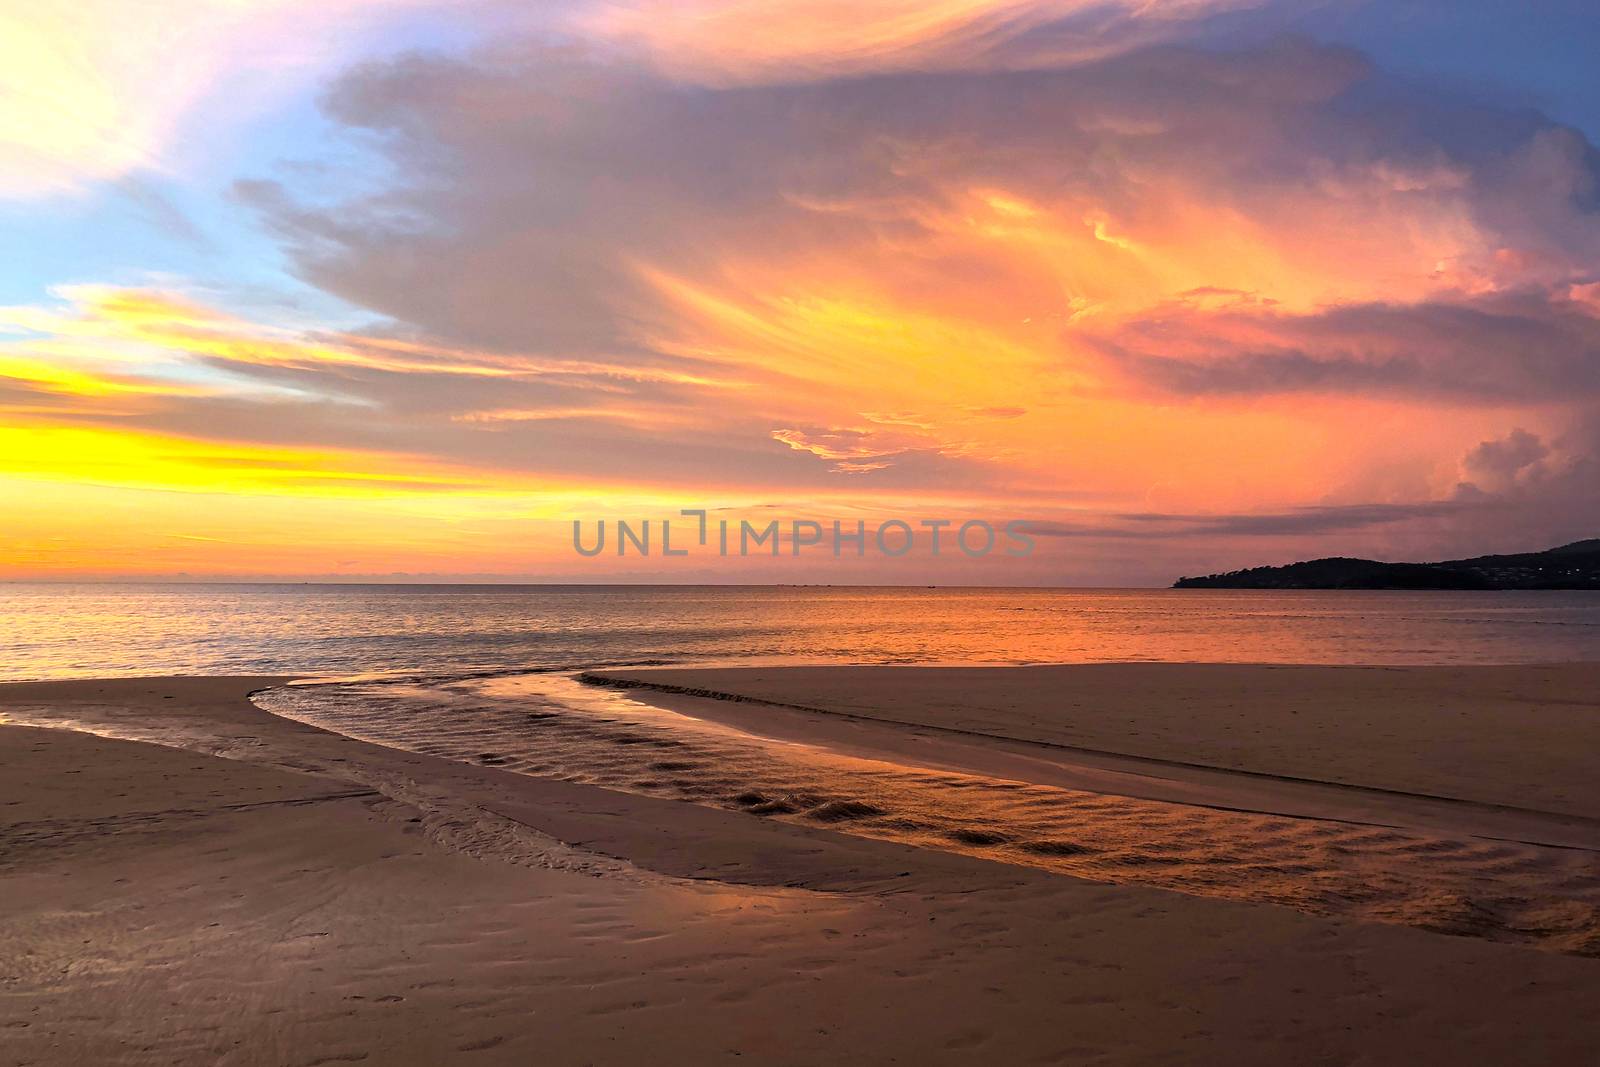 View of sunset at Karon beach in Phuket, Thailand by Surasak